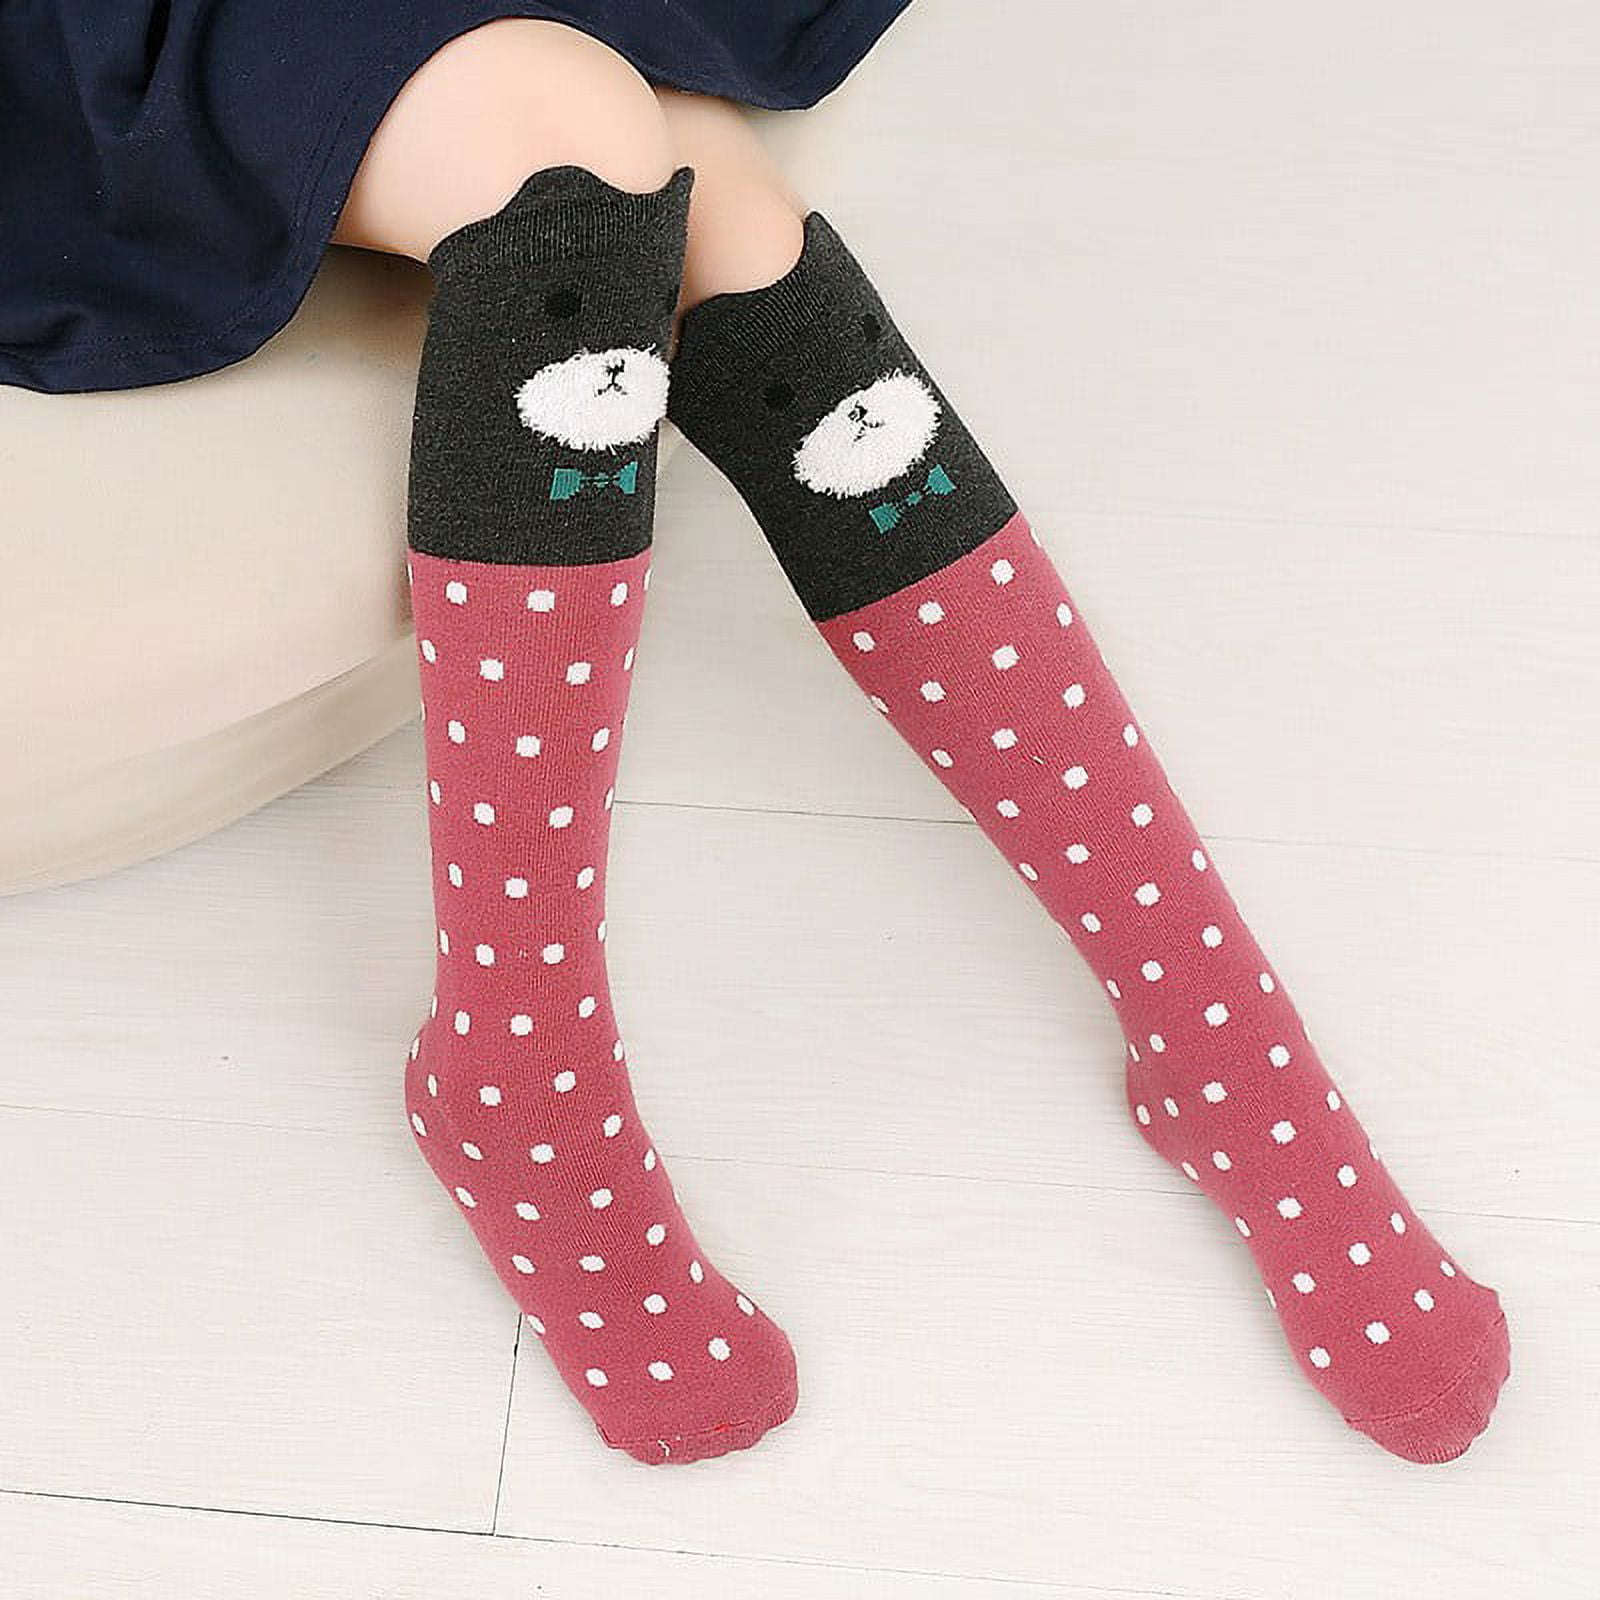  sockfun Novelty Girls Socks Kids Socks Knee High Socks, Gifts  for Girls Kids Gifts 3-12 Years Anime Gifts for Teen Girls : Clothing,  Shoes & Jewelry